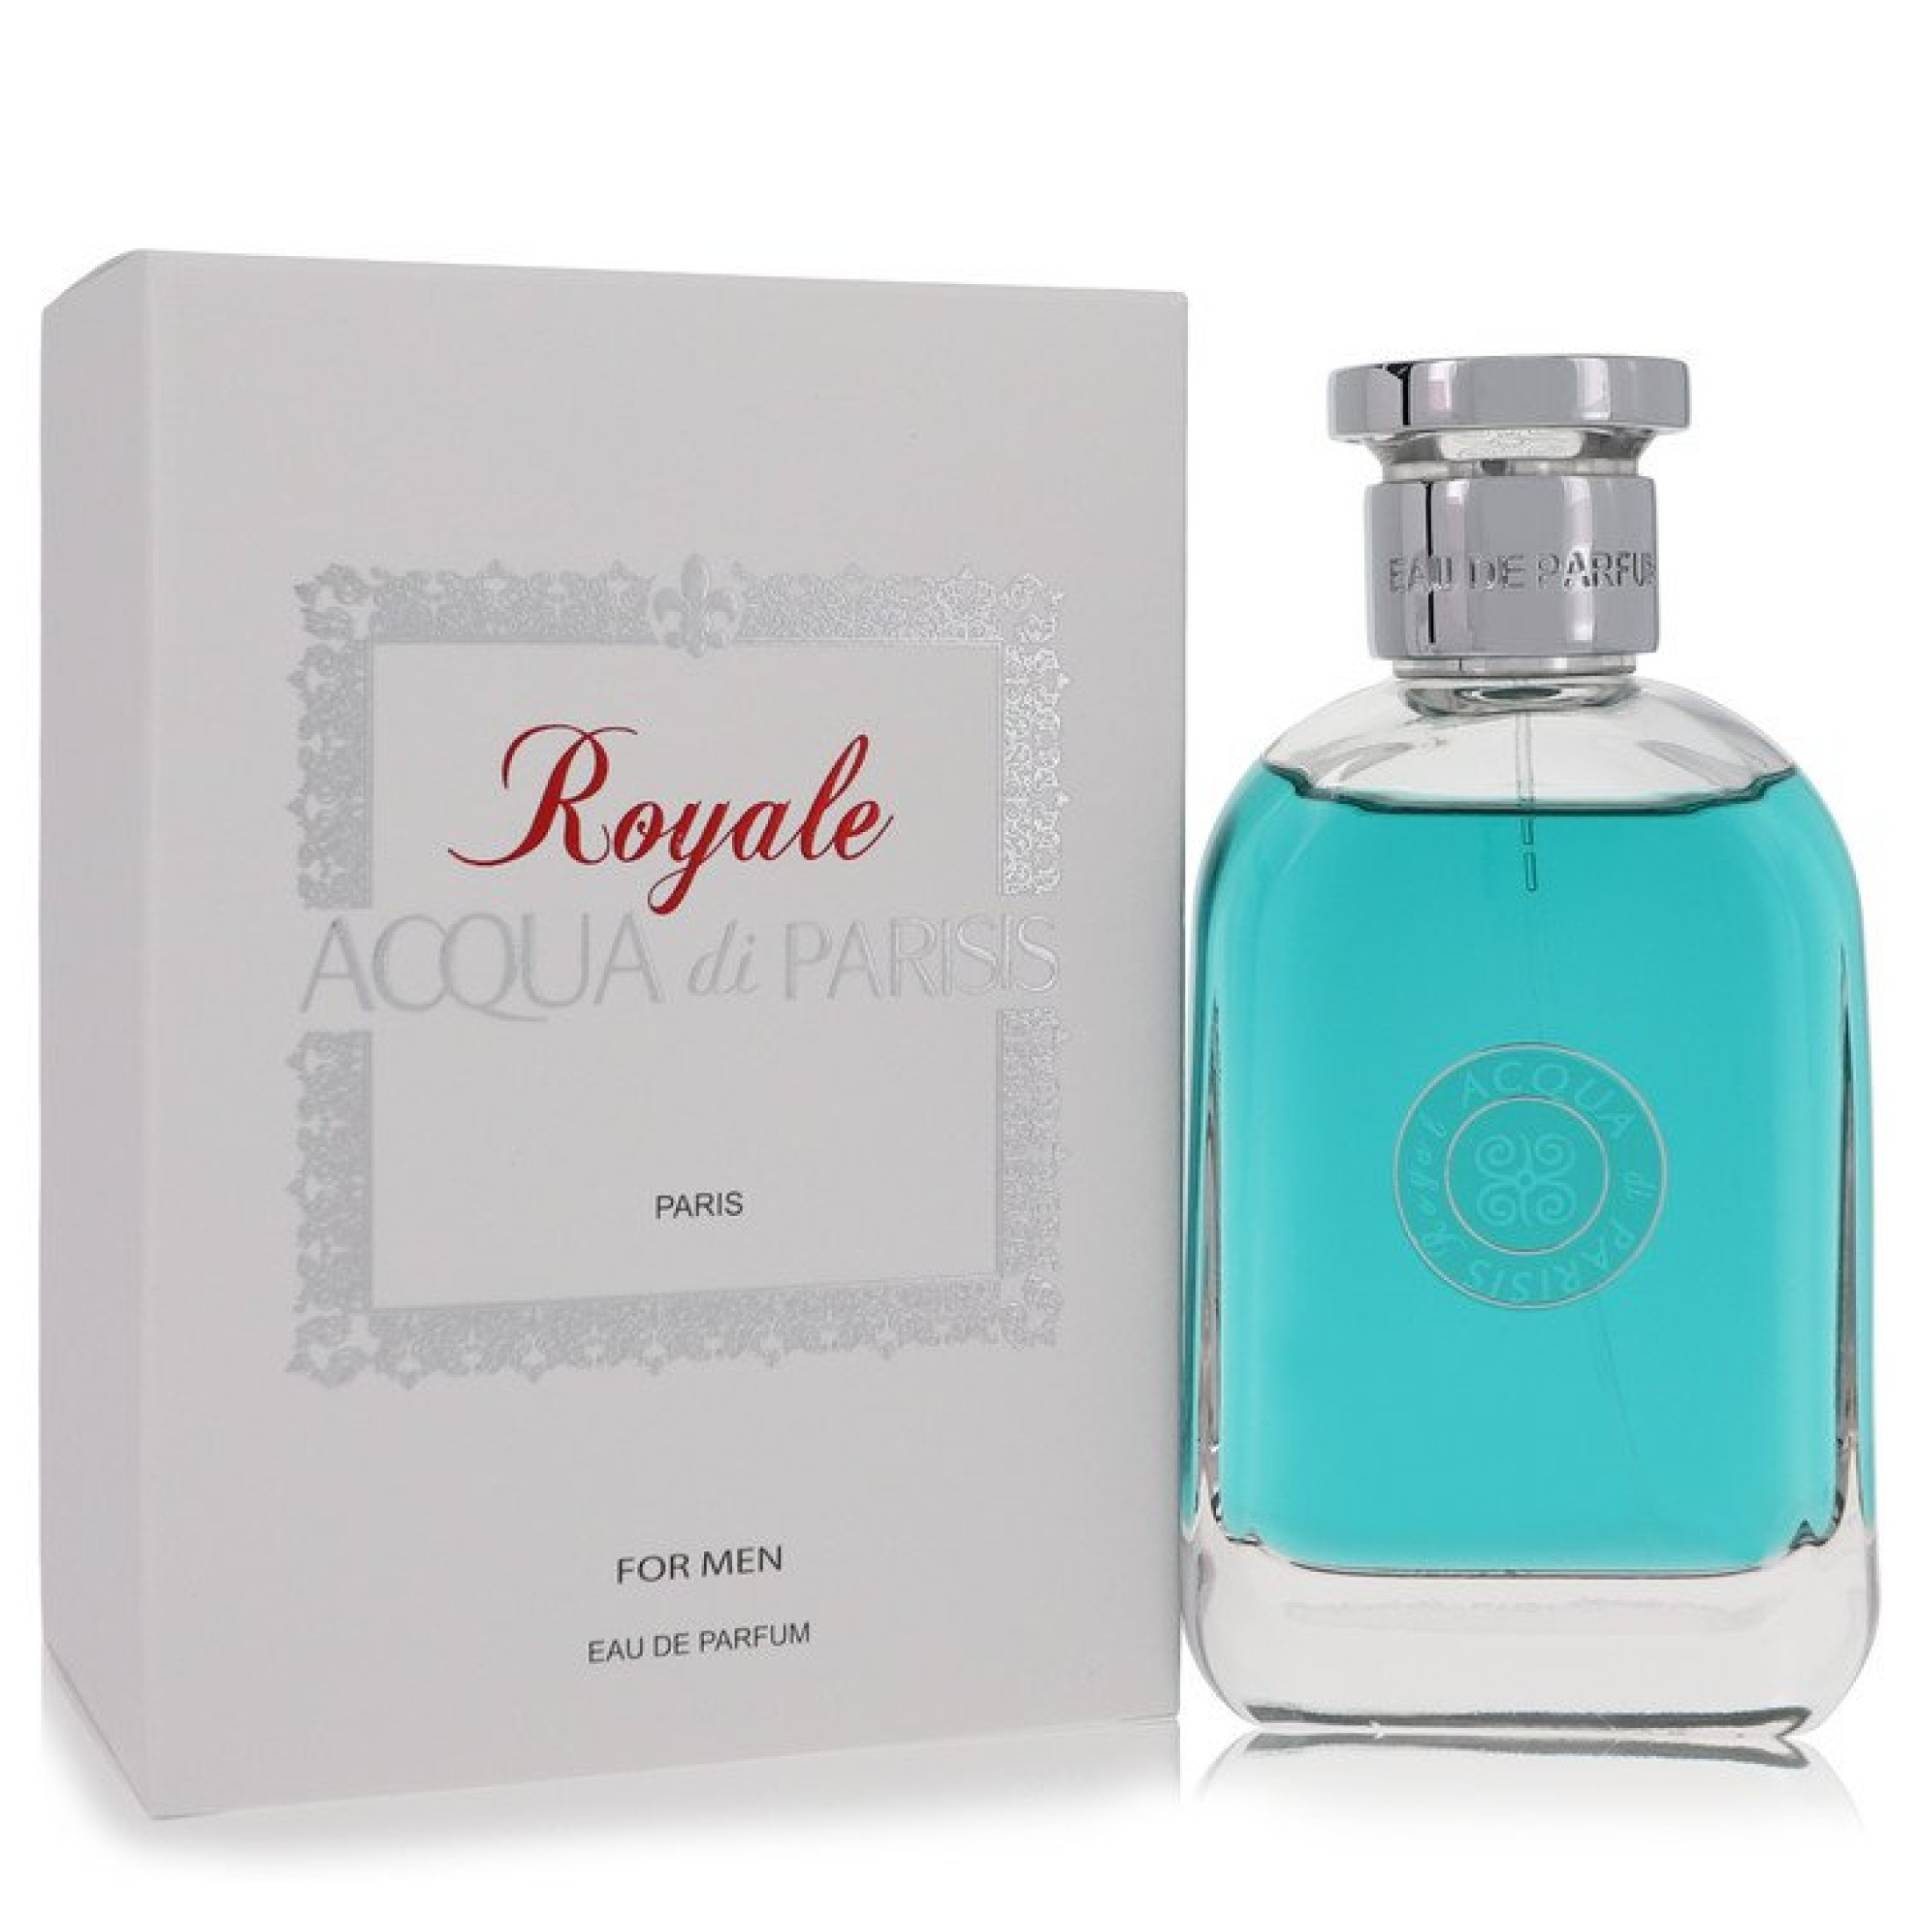 Reyane Tradition Acqua Di Parisis Royale Eau De Parfum Spray 100 ml von Reyane Tradition